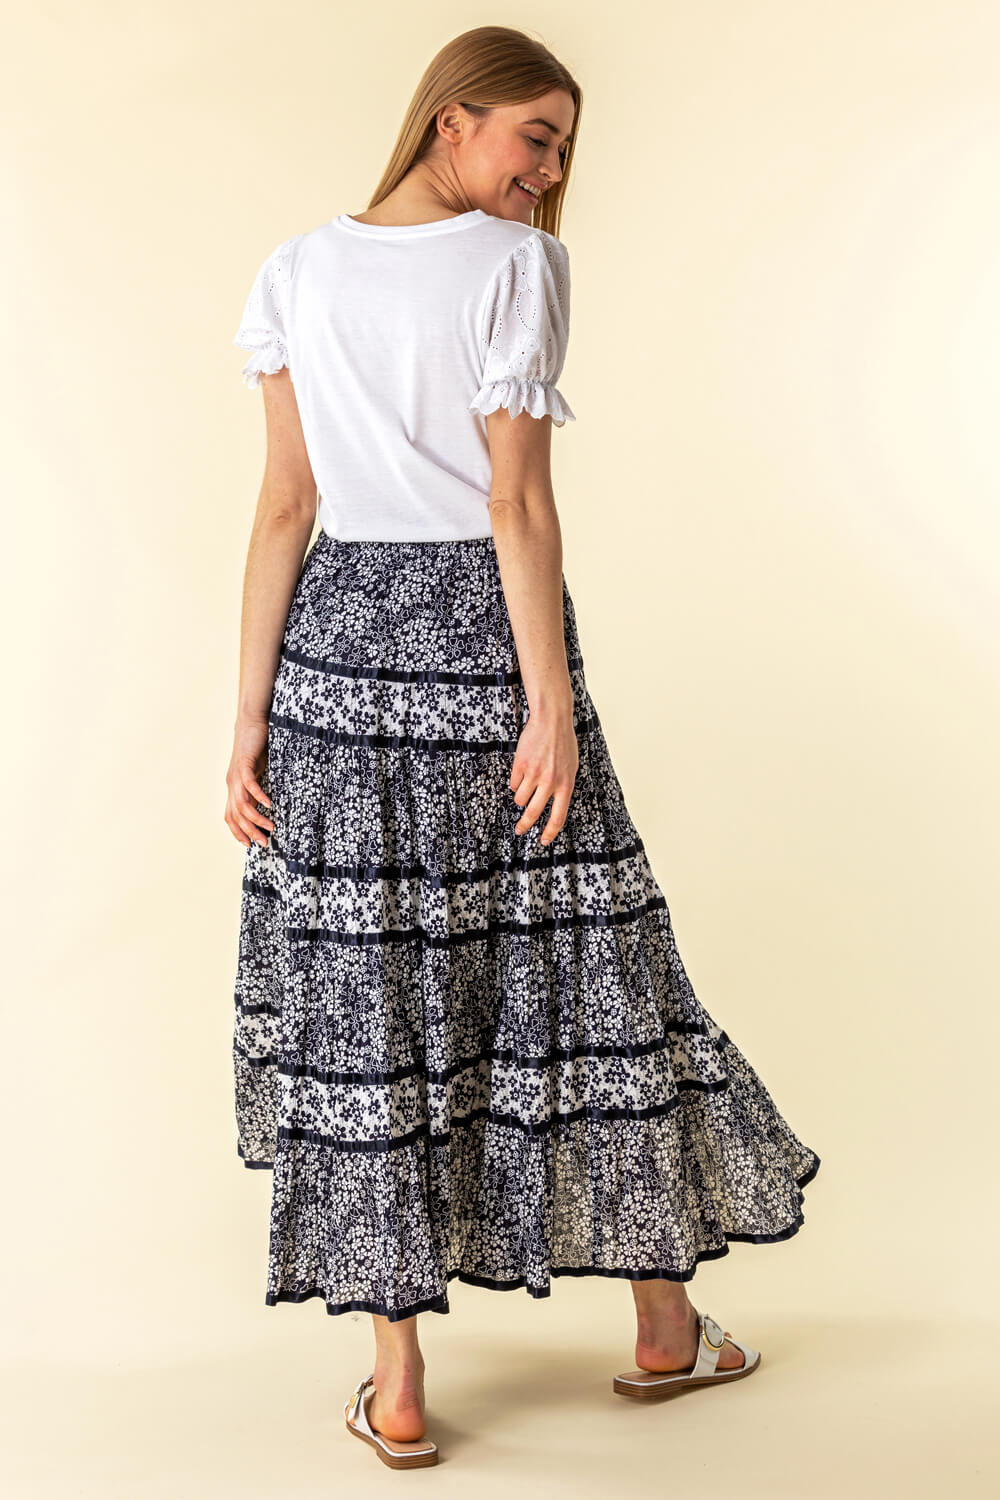 Floral Print Tiered Maxi Skirt in Navy - Roman Originals UK